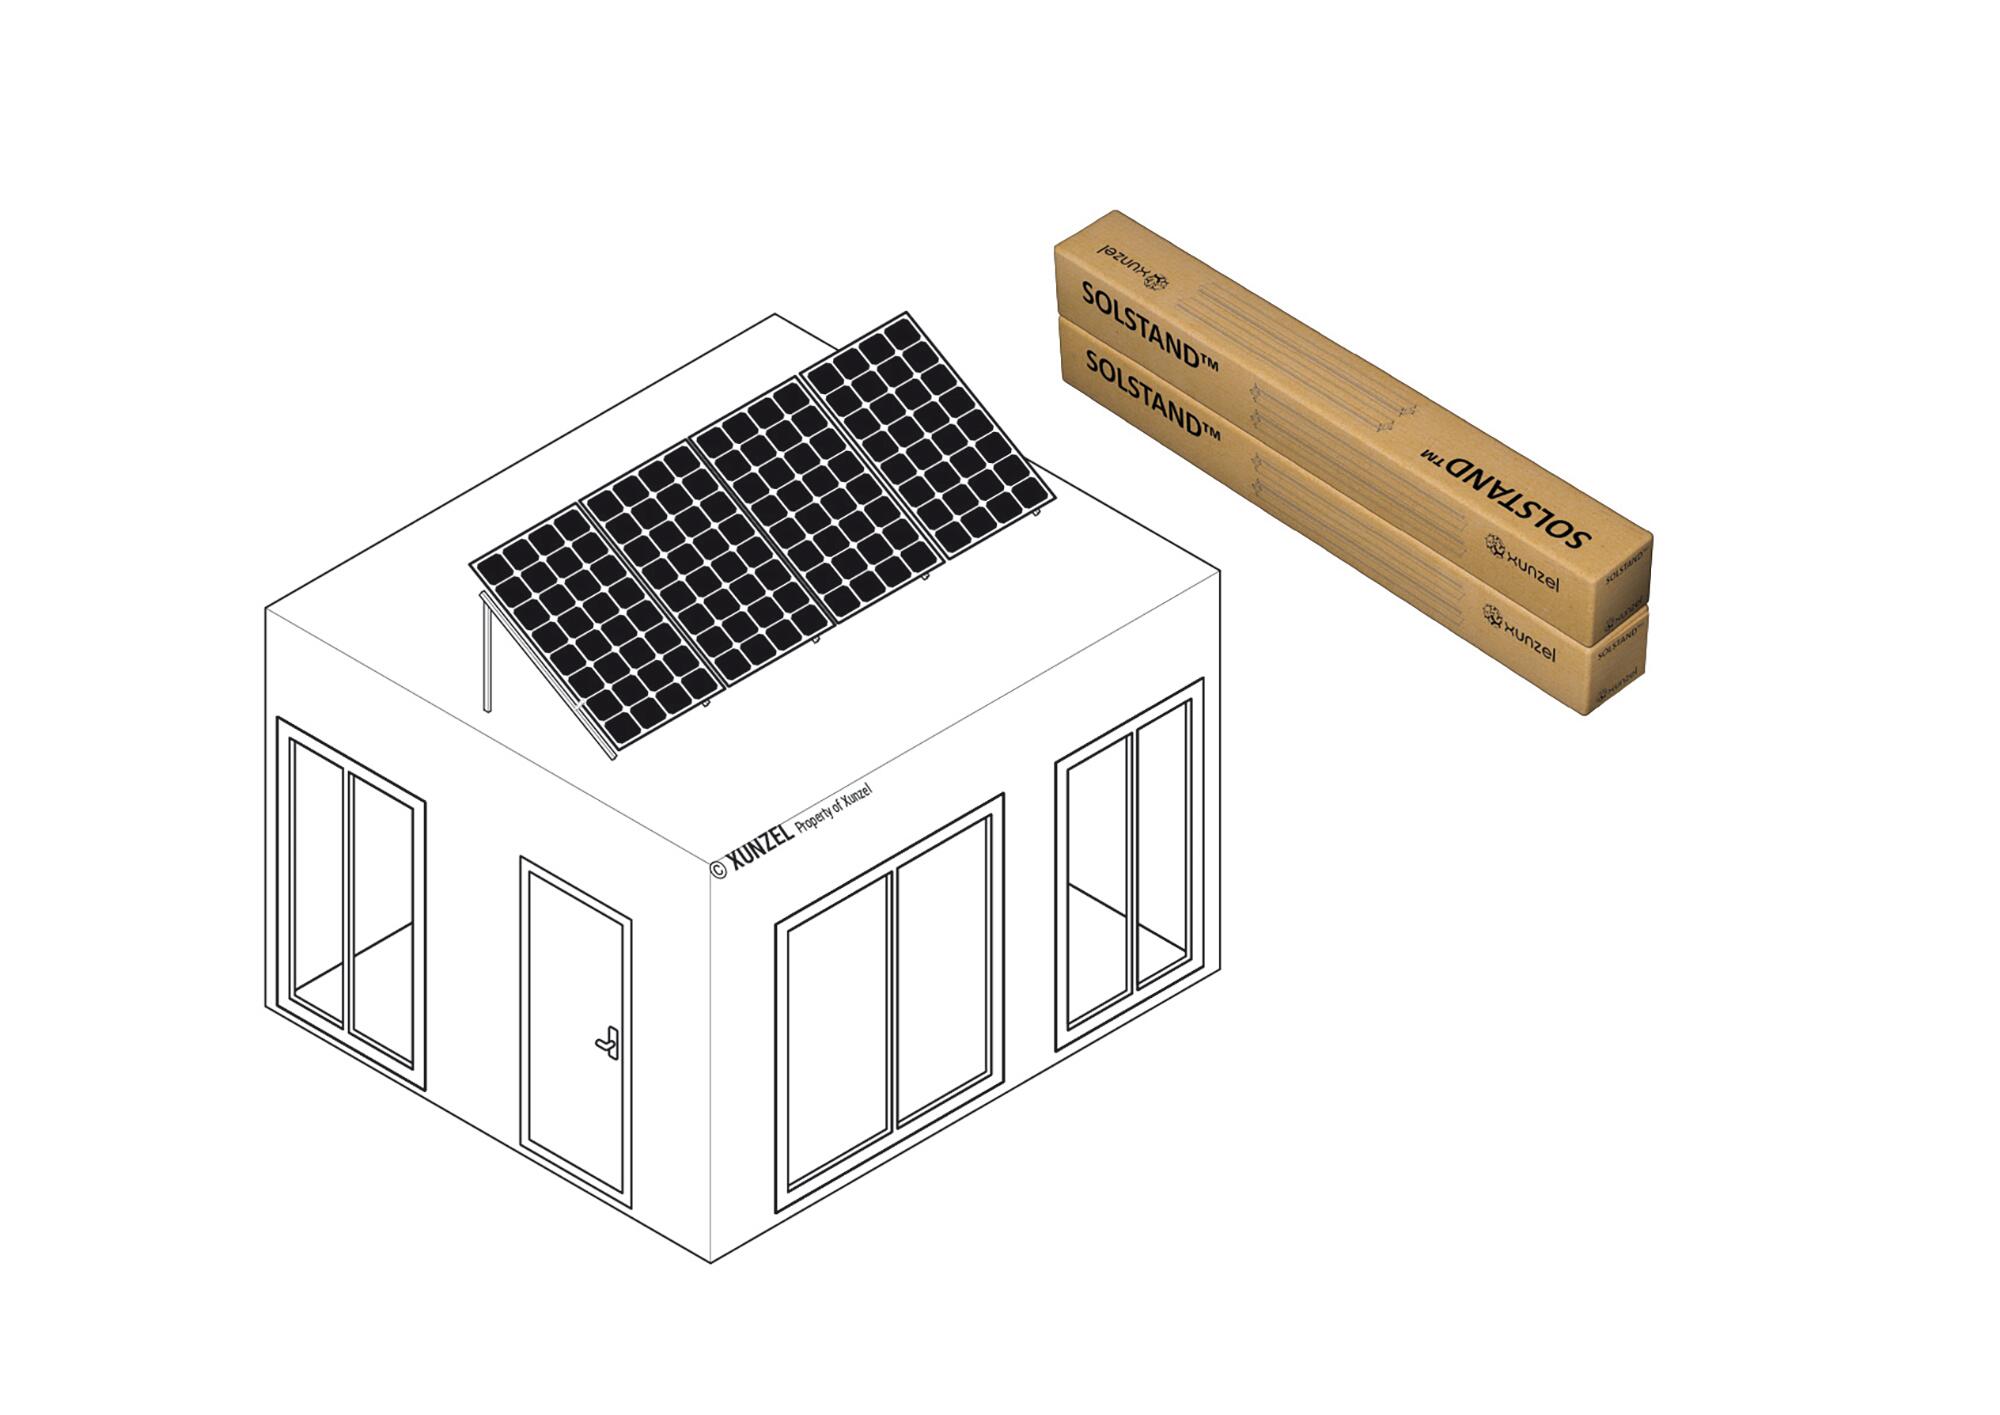 Soporte suelo/cubierta plana solstand-4g-xxl para 4 paneles solarpower-425w